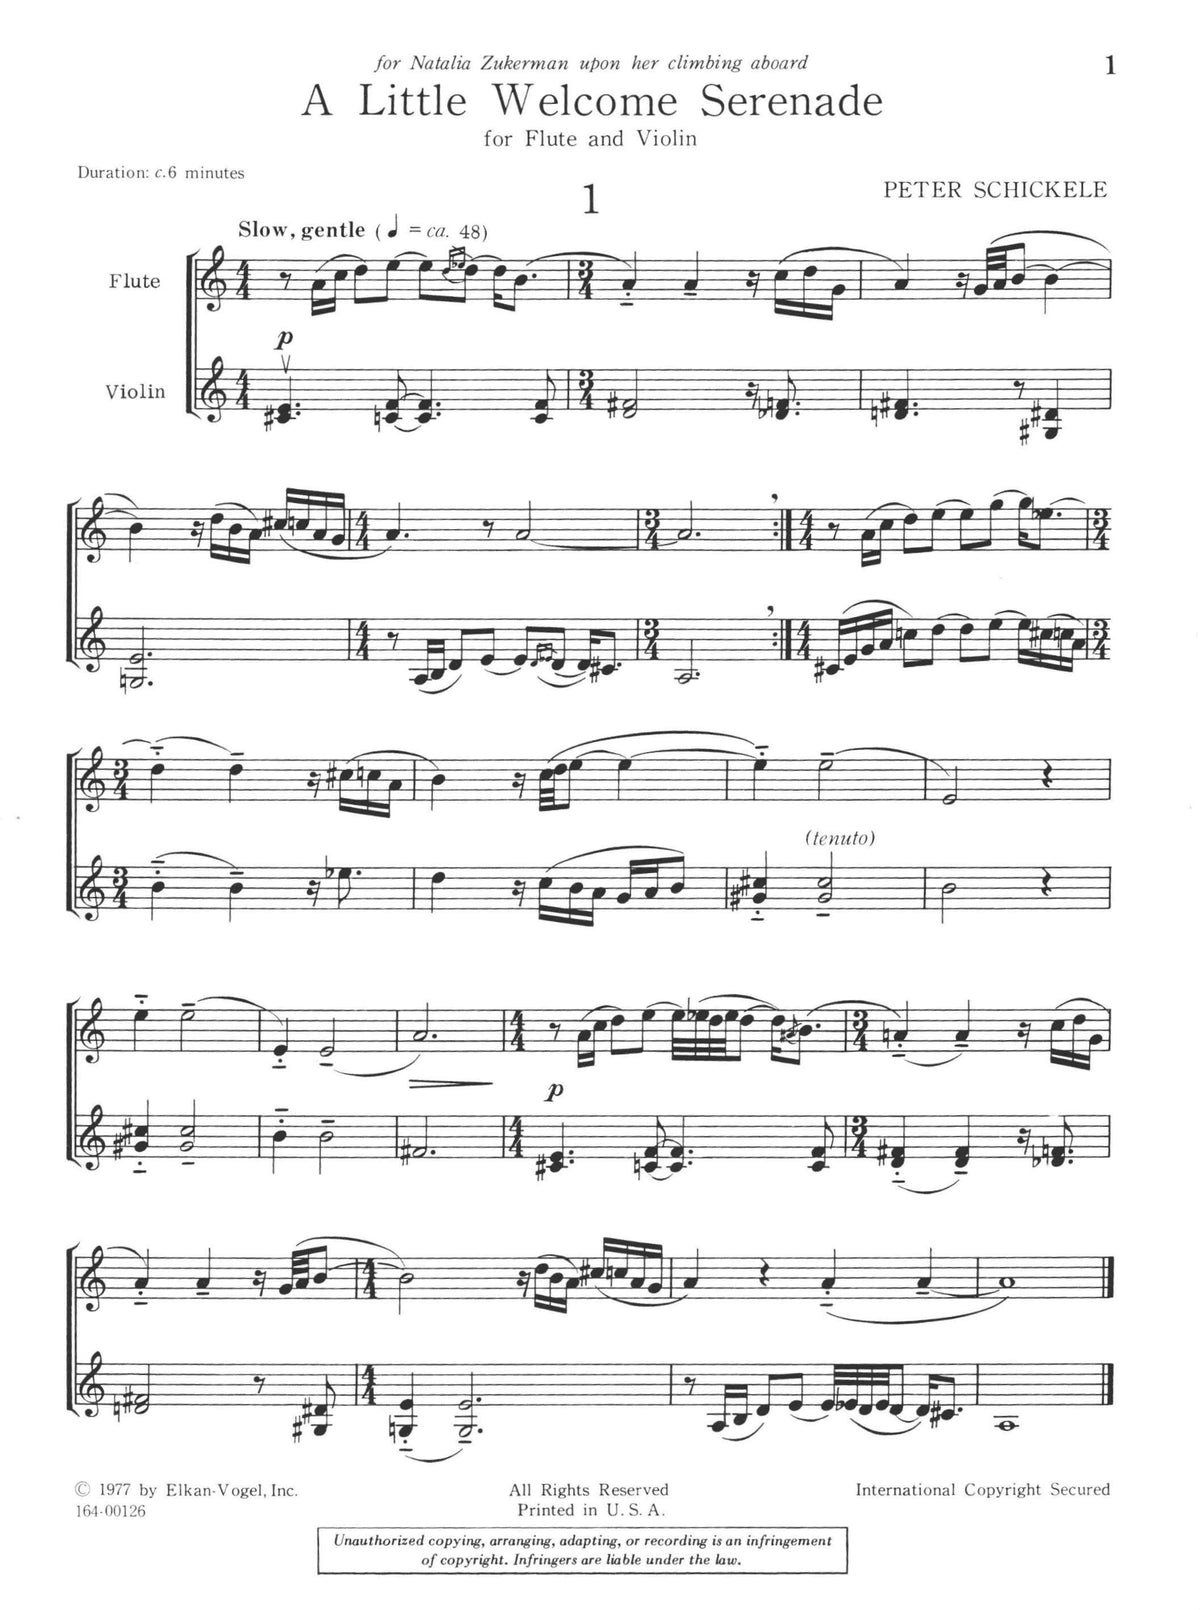 Schickele, Peter - A Little Welcome Serenade - Flute and Violin - Elkan-Vogel Edition